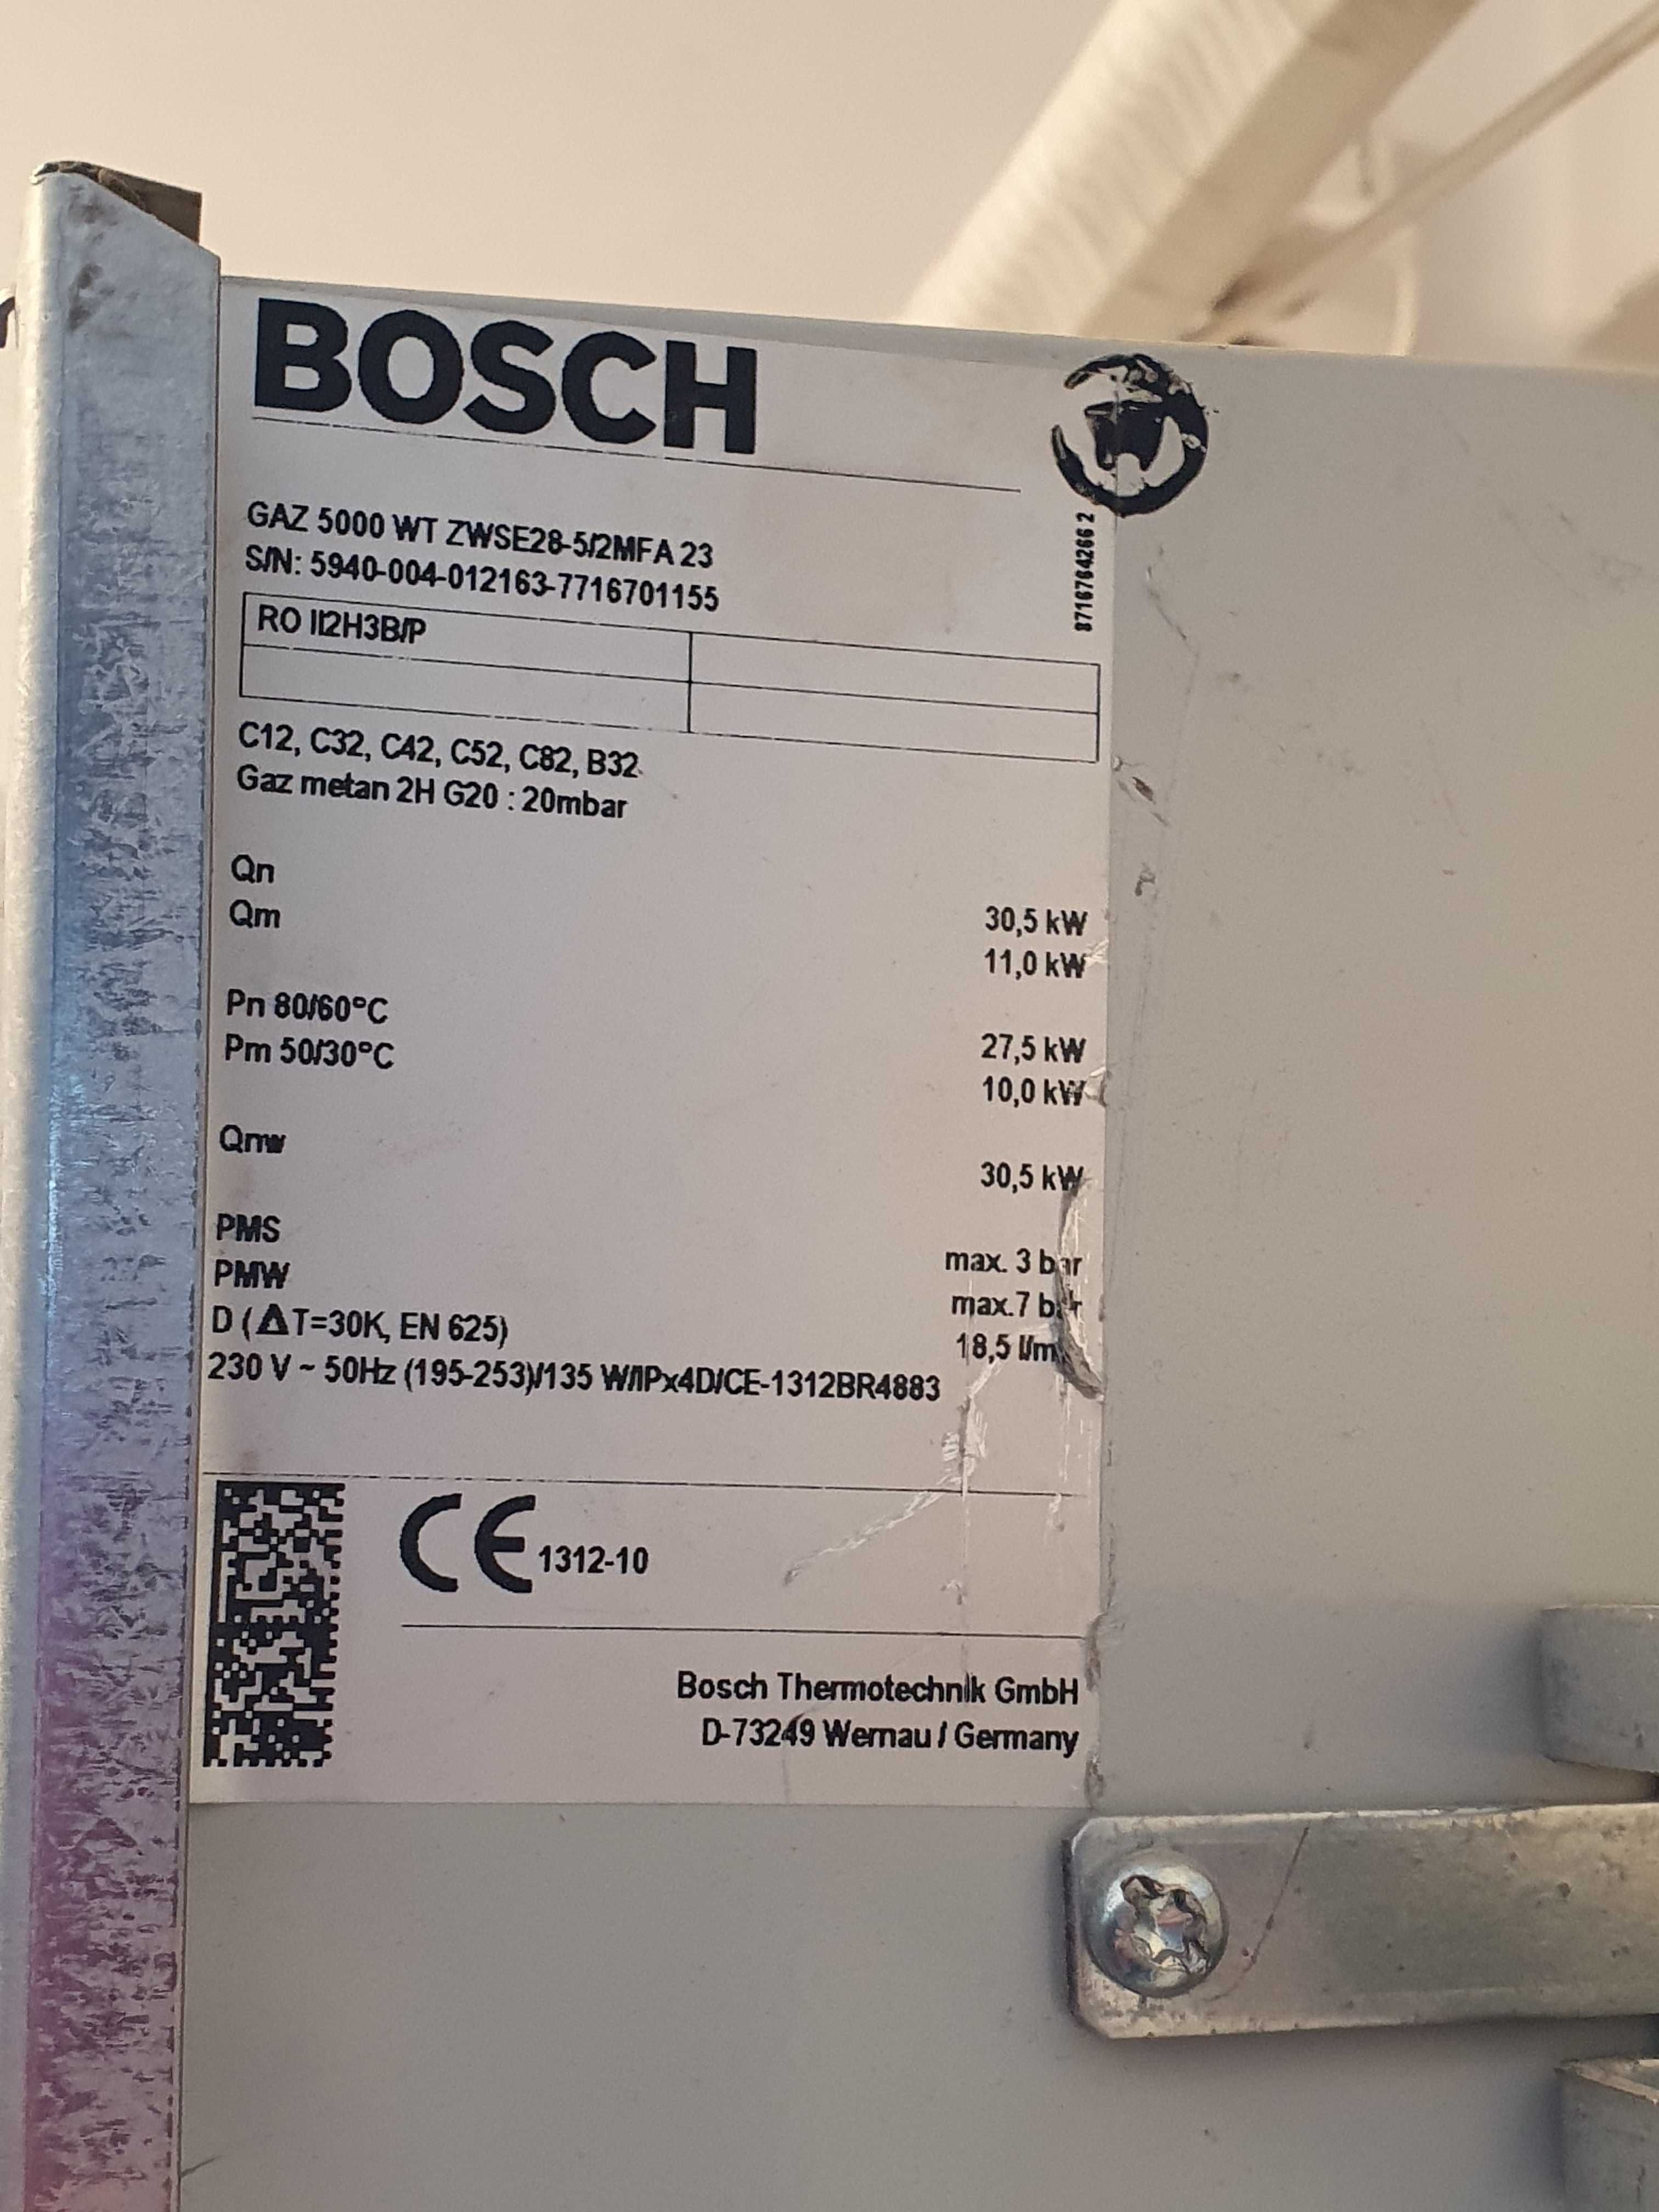 Vand centrala Bosch 5000 WT pt piese